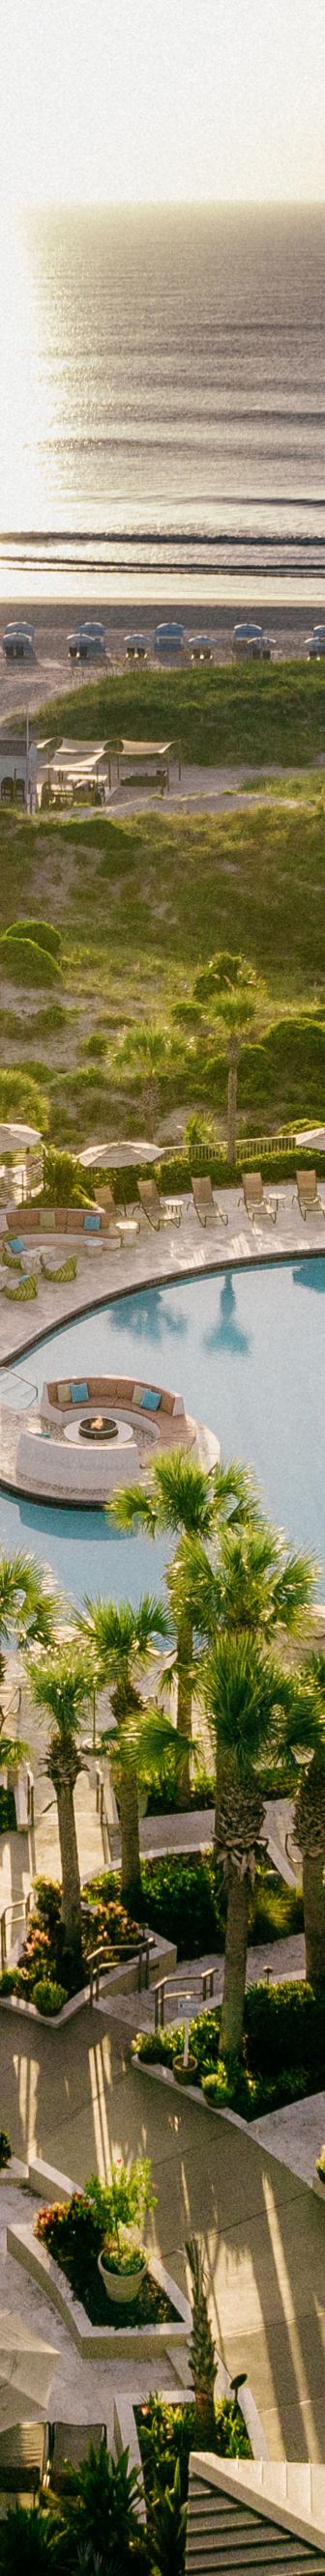 Aerial view of The Ritz-Carlton Amelia Island pool